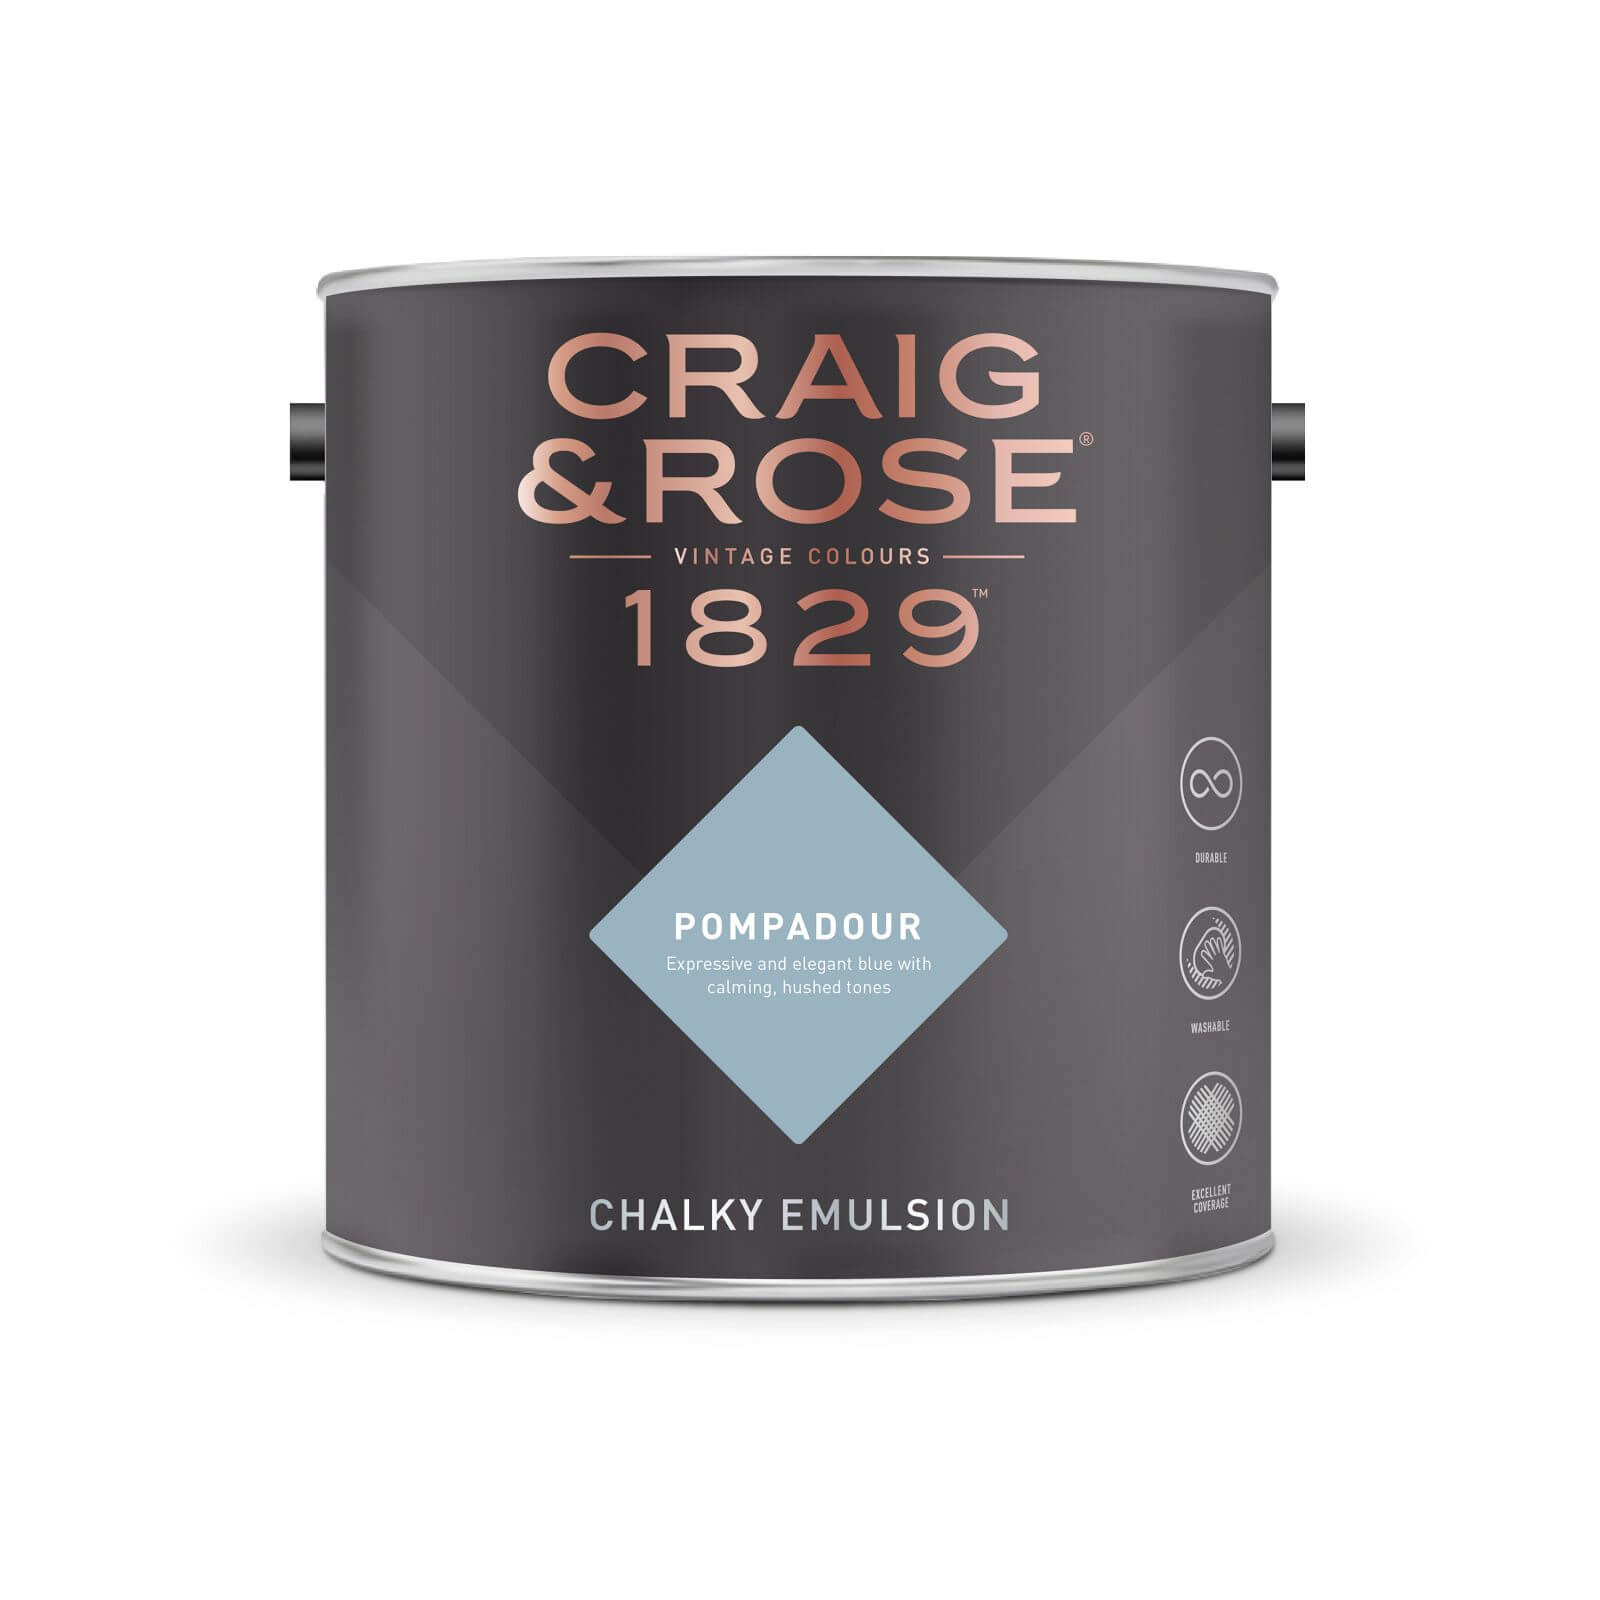 Craig & Rose 1829 Chalky Emulsion Paint Pompadour - Tester 50ml